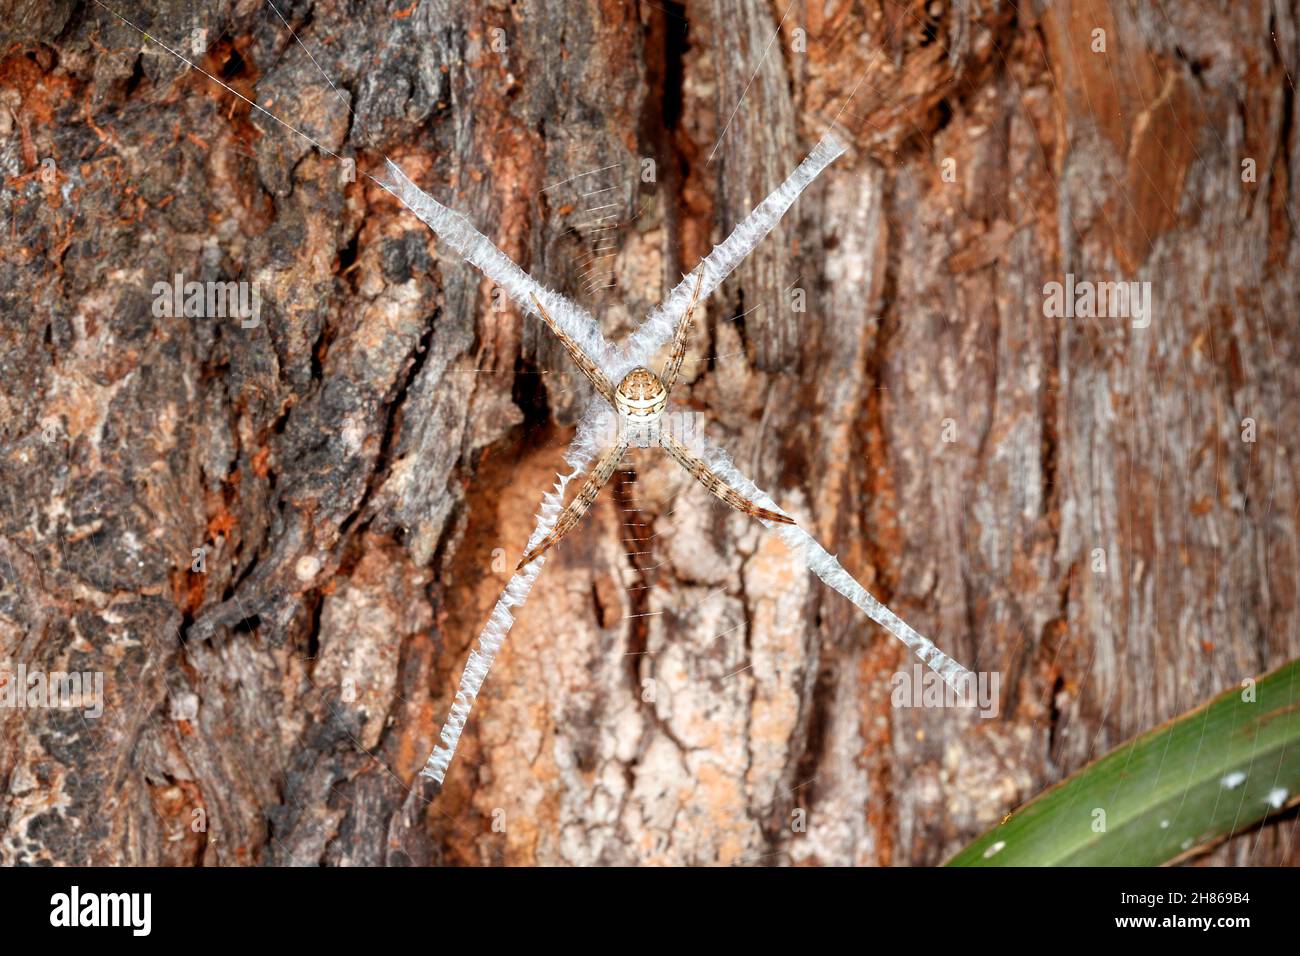 St Andrews Cross Spider, Argiope keyserlingi,i s an orb weaver spider from Australia. Female, showing the cross stabilimentum in her web. Stock Photo